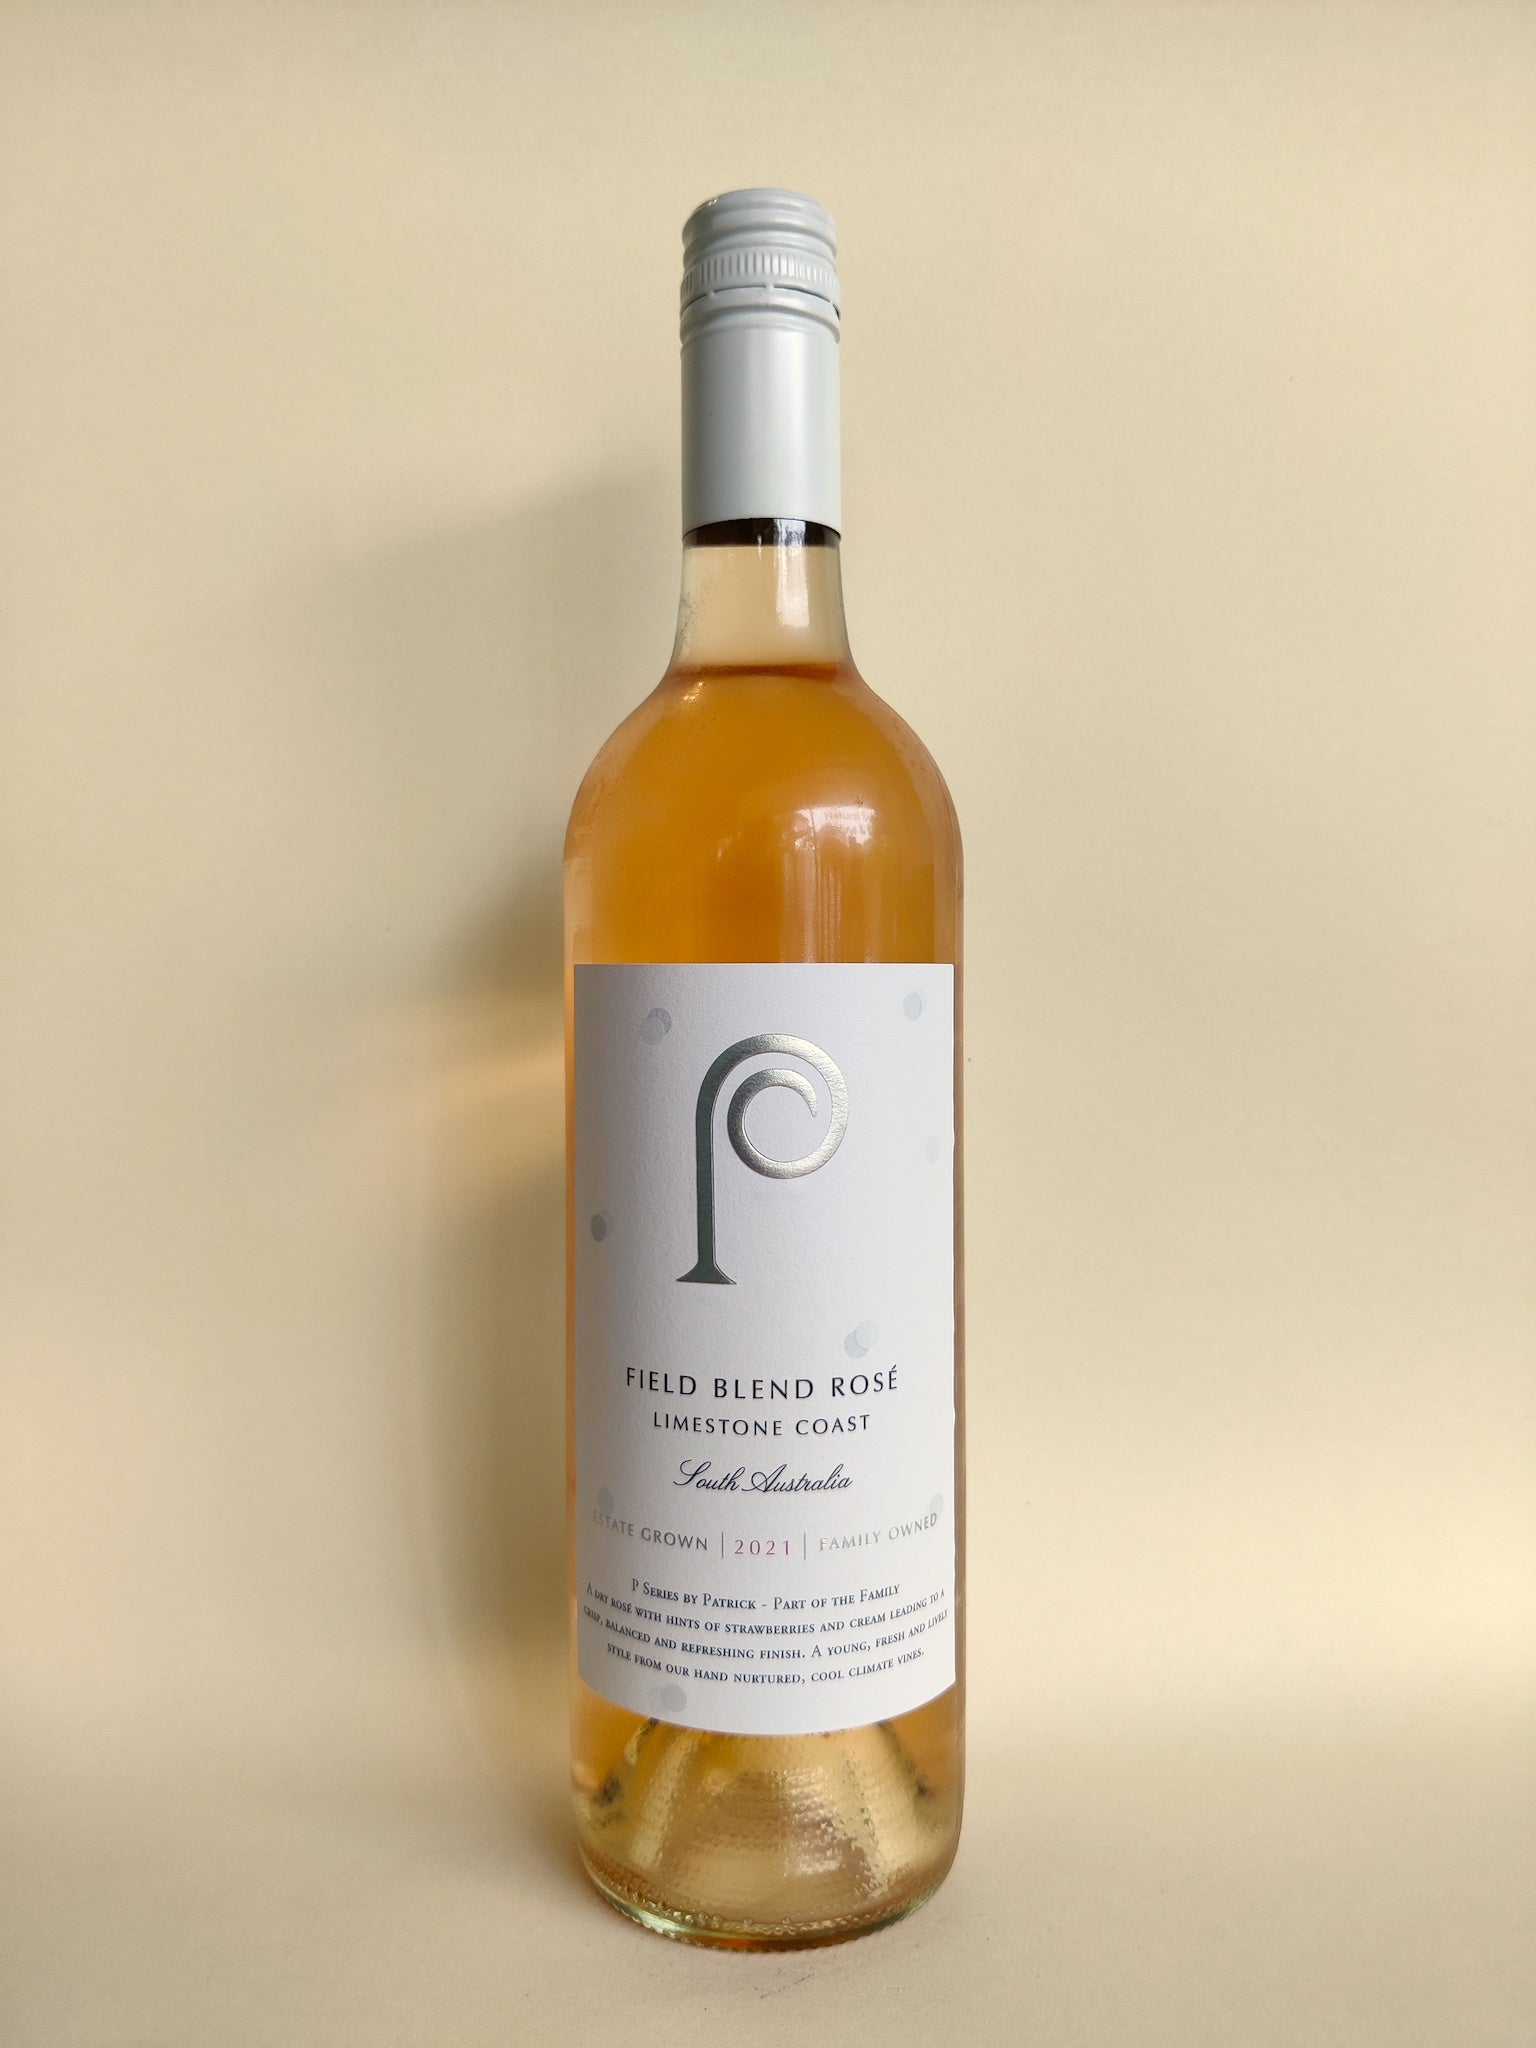 A bottle of Patrick of Coonawarra P-Series field blend rosé from Limestone Coast, South Australia.